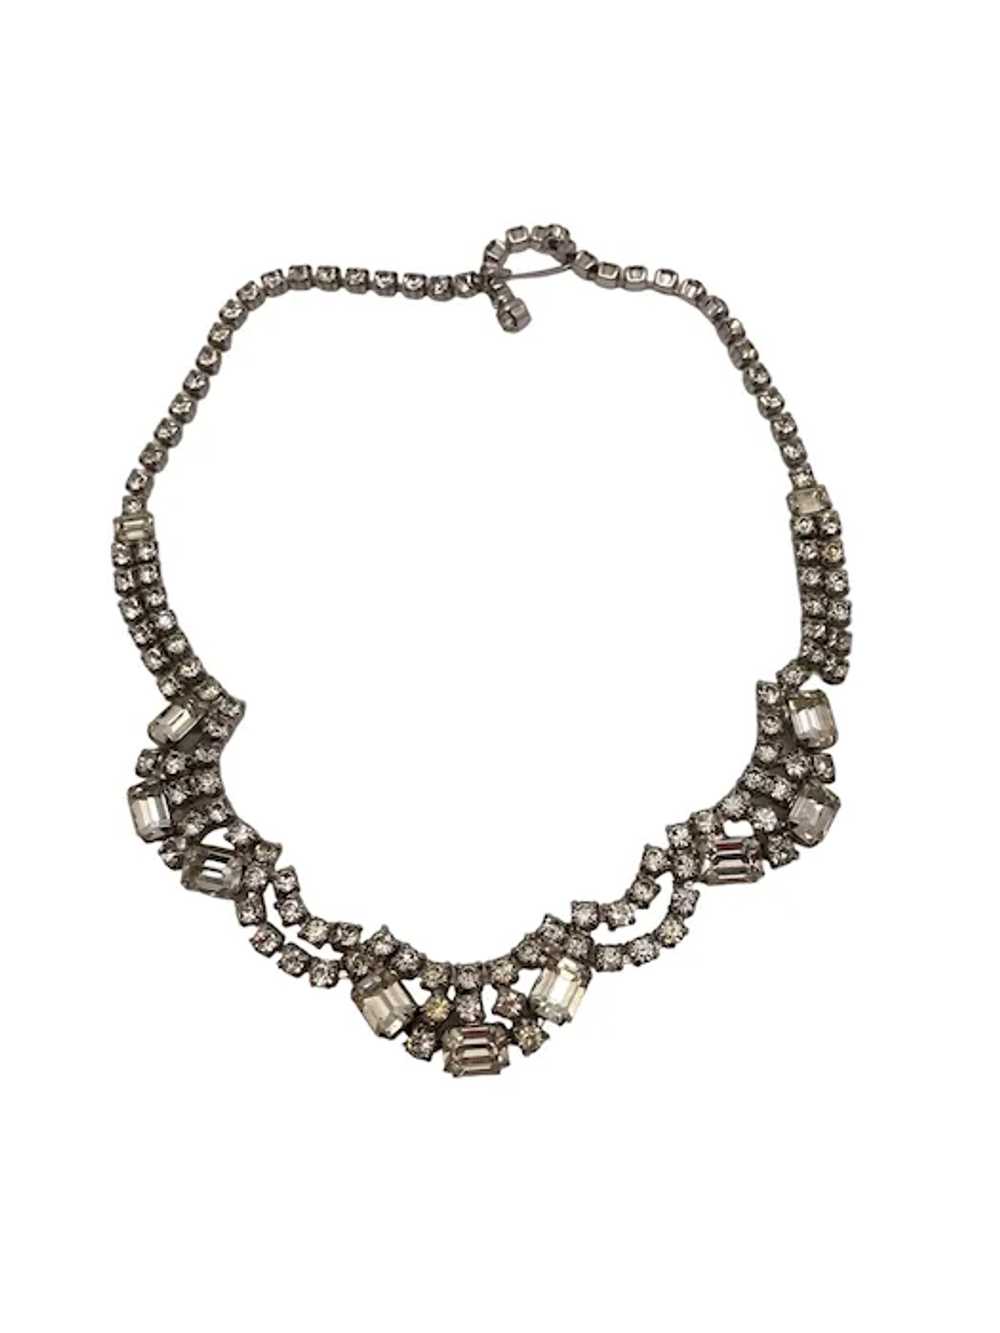 Vintage Mid-Century Rhinestone Choker Necklace - image 4